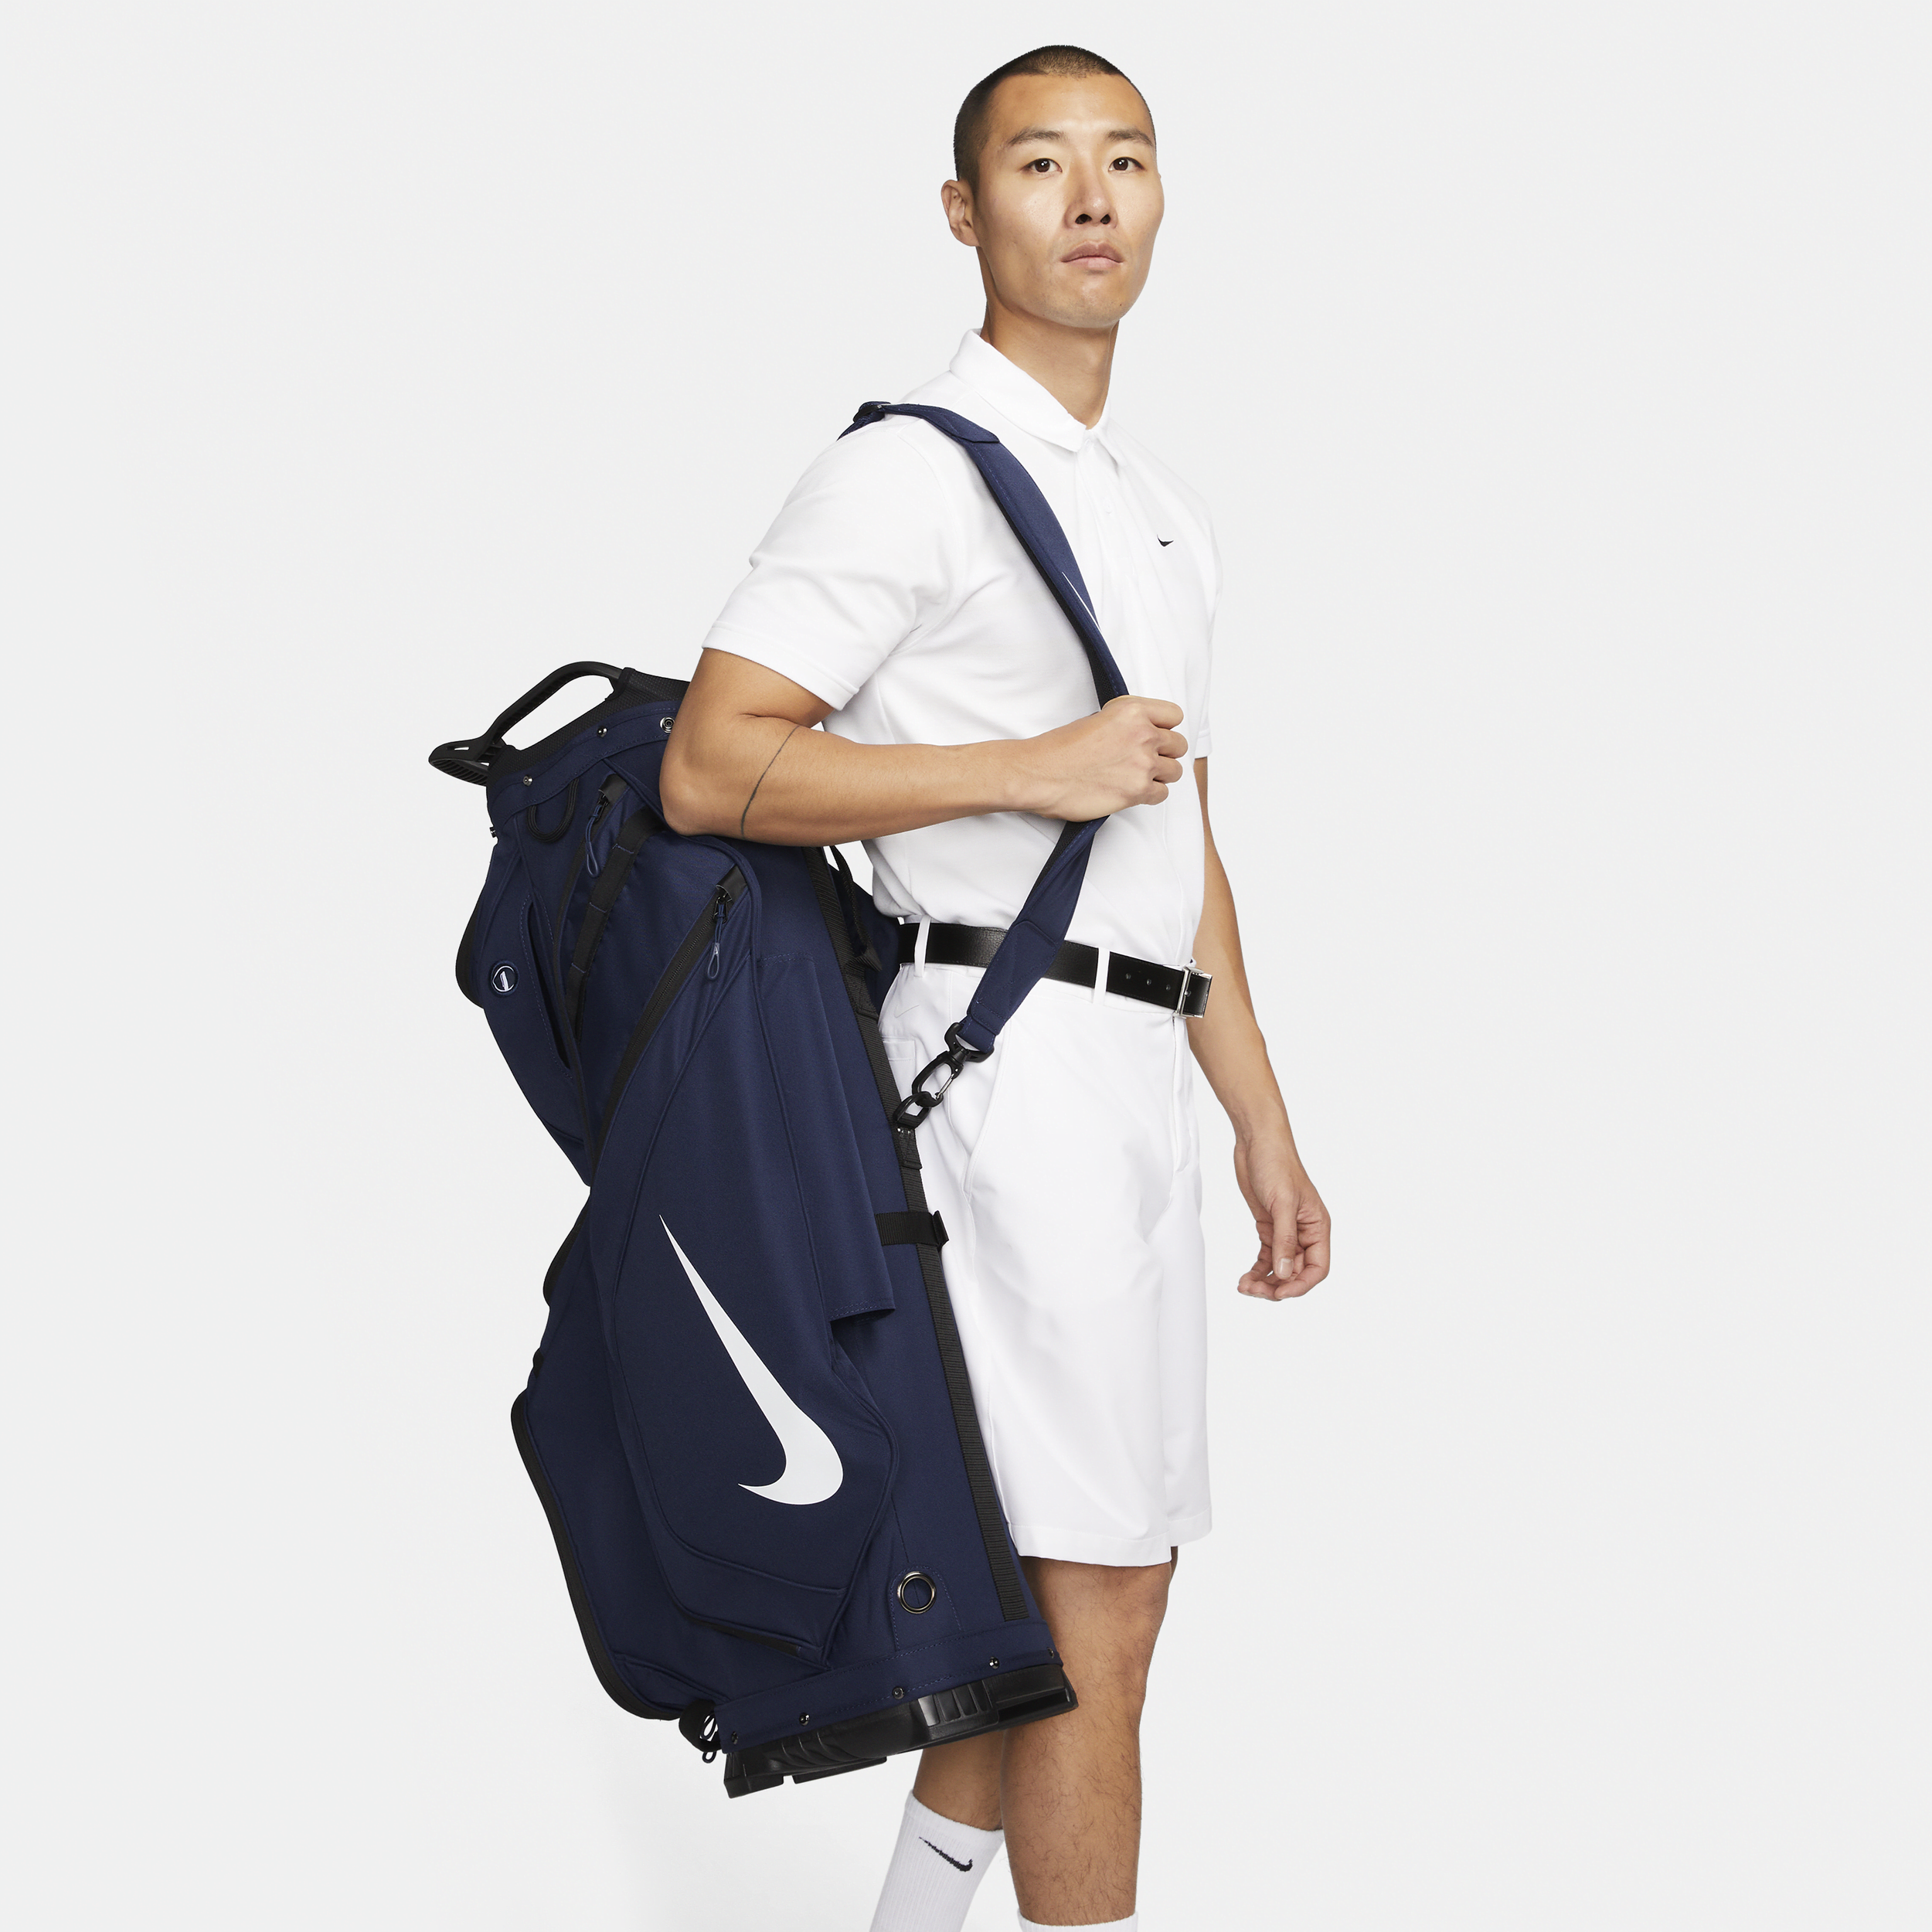 Nike Unisex Performance Cart Golf Bag In Blue